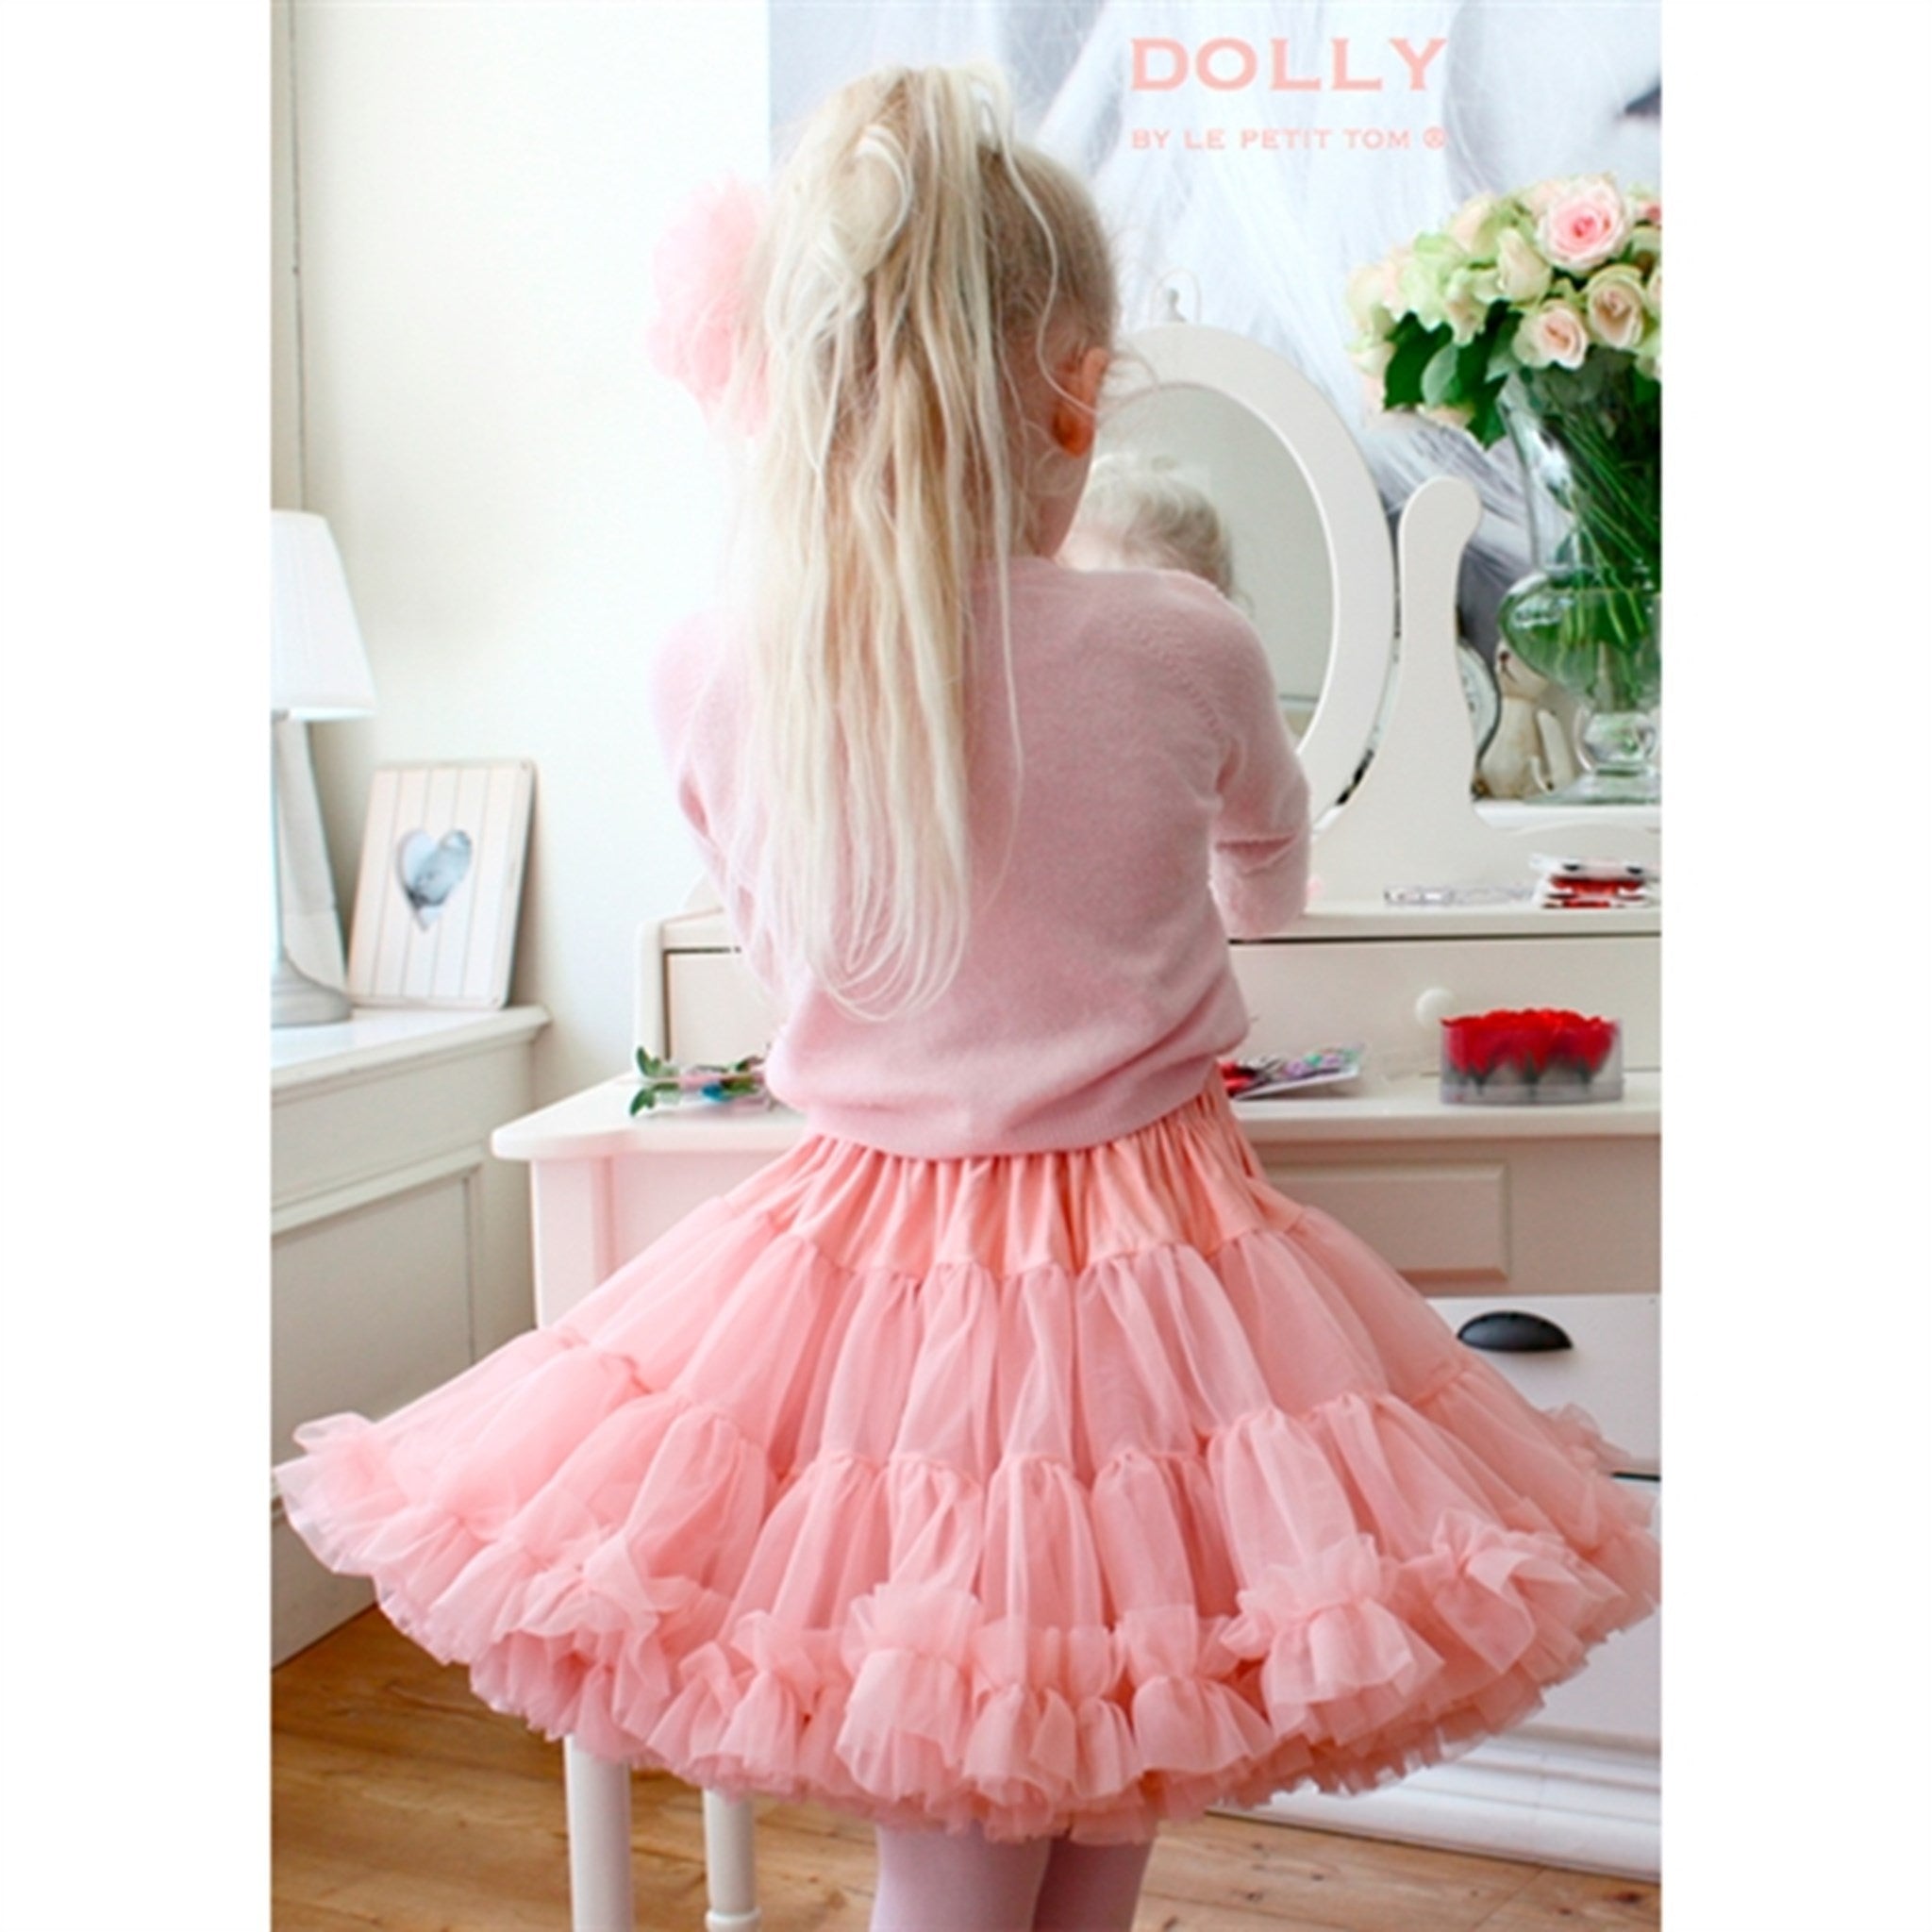 Dolly By Le Petit Tom Petttiskirt Queen Of Roses Skirt Rose Pink 2